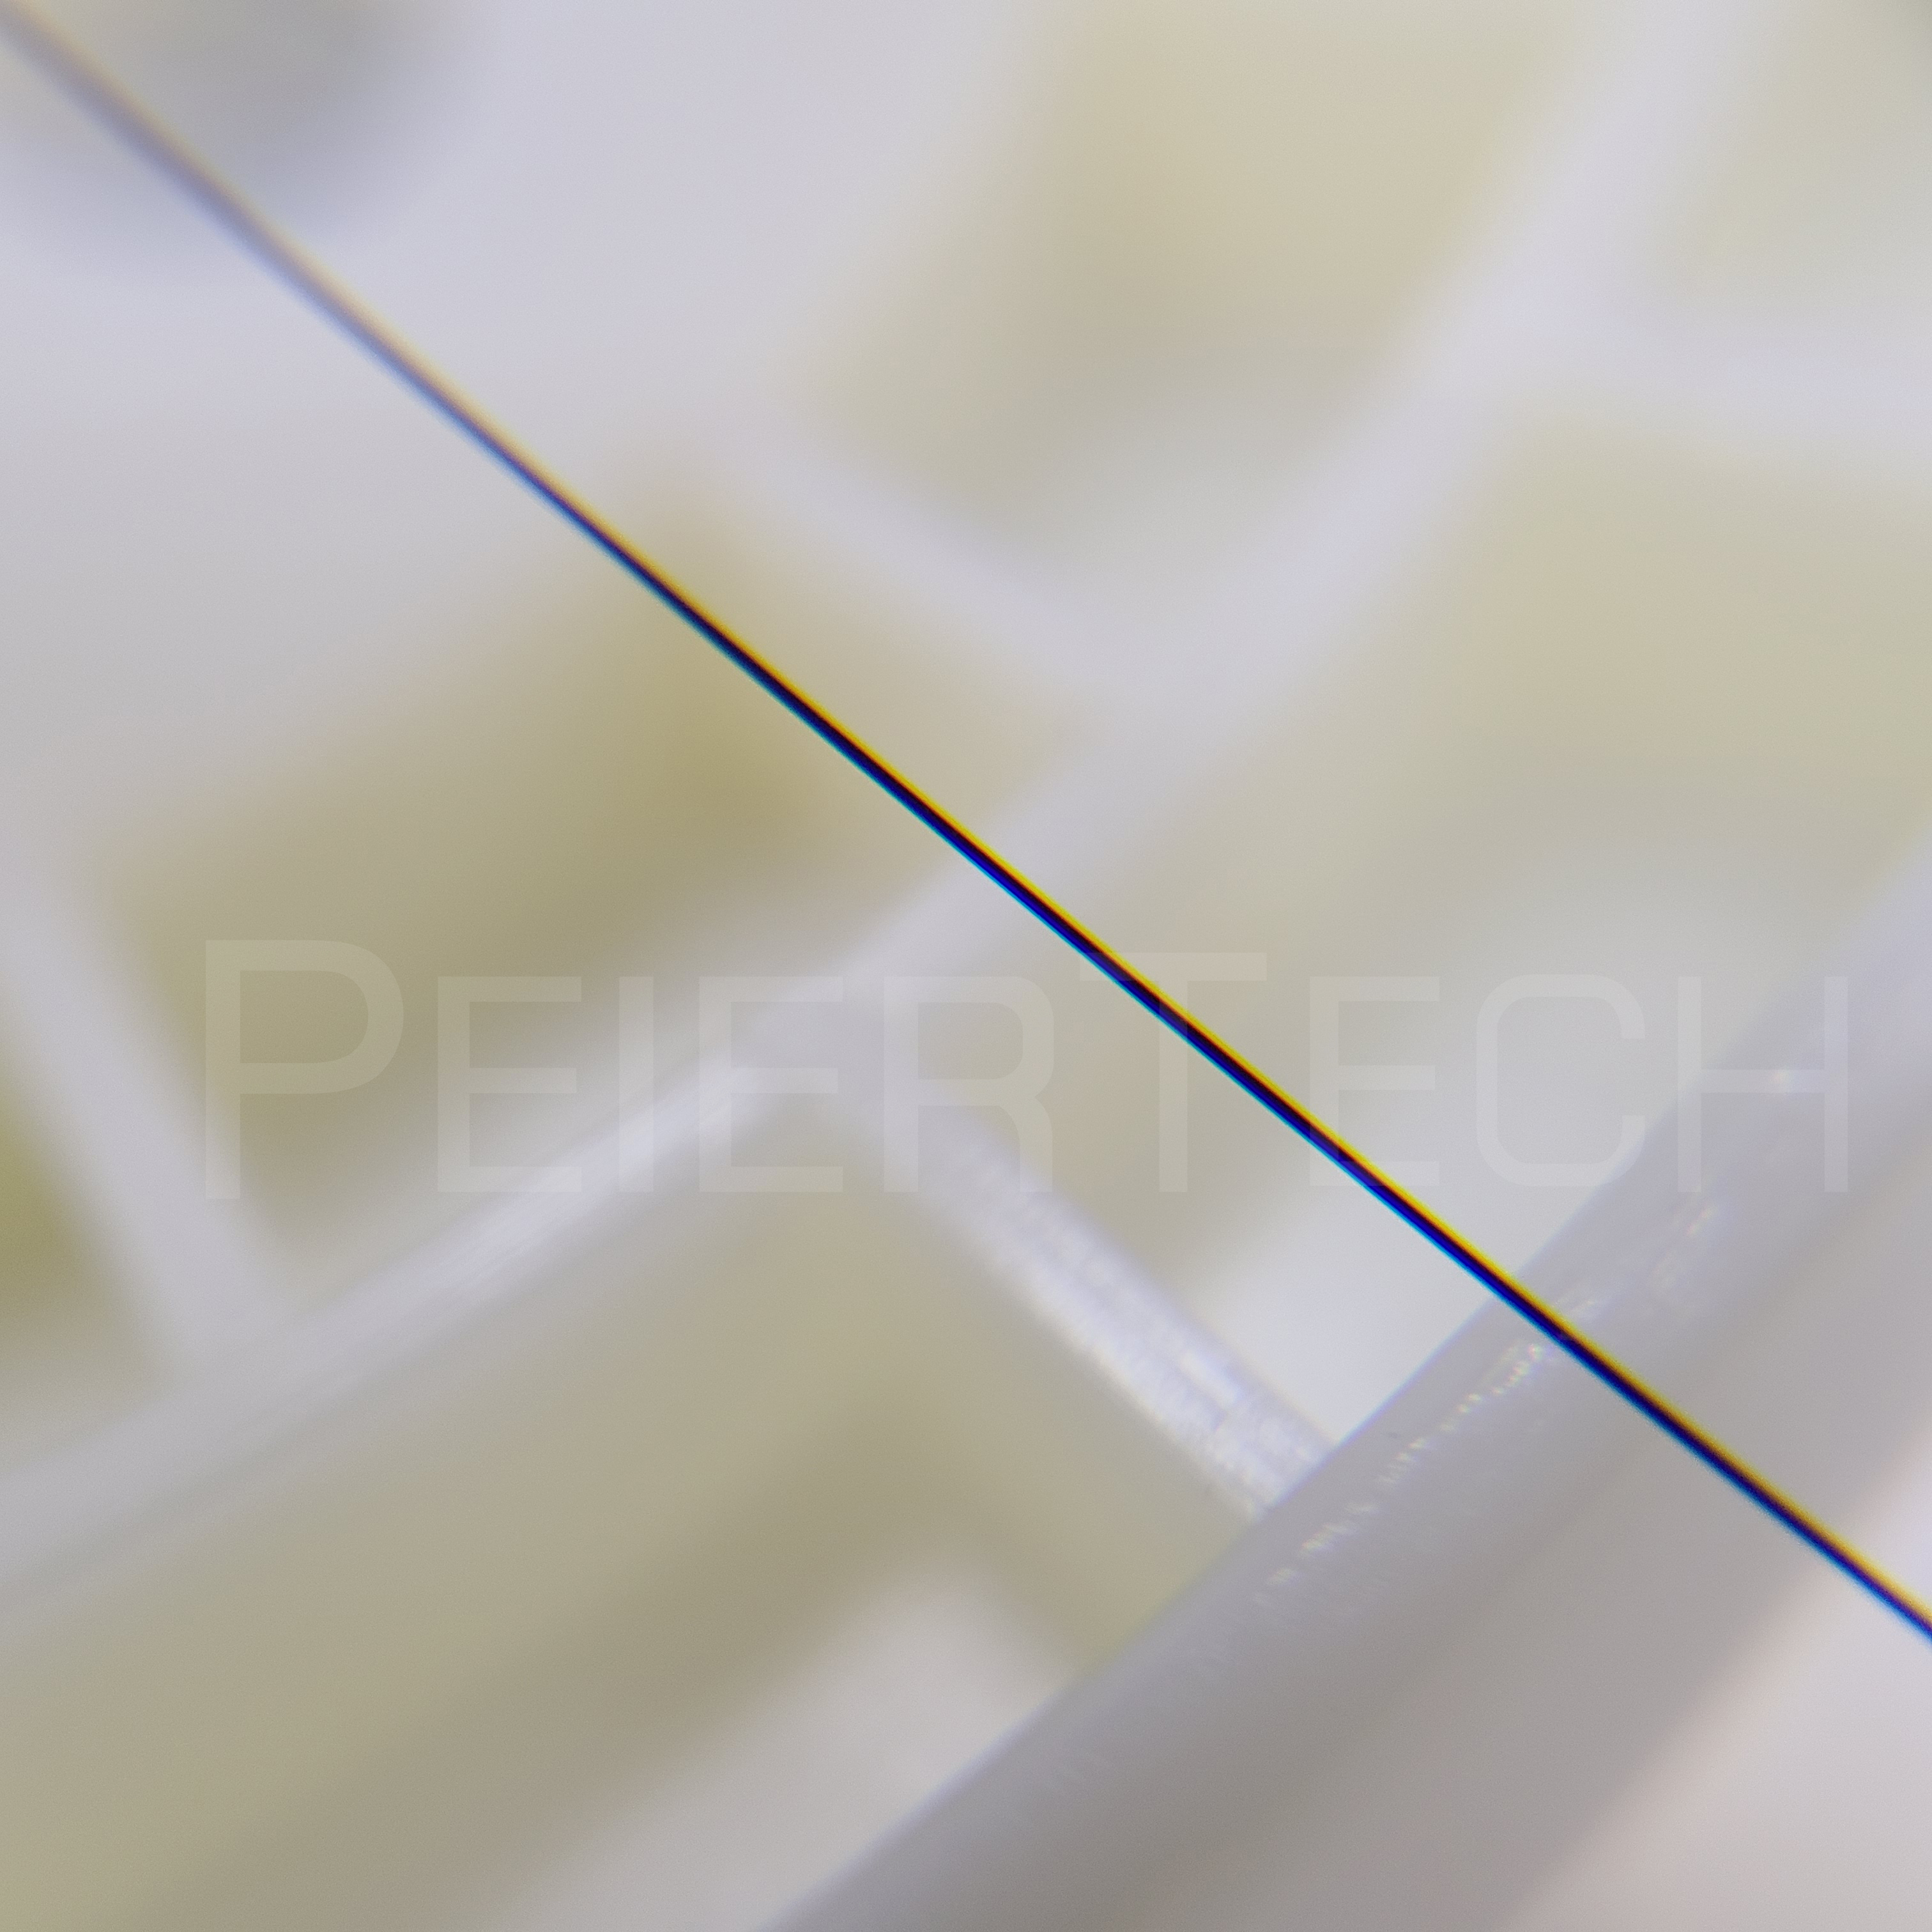 Nitinol Wire Memory Nitinol Peiertech provides High Quality Low Inclusion Nitinol Materials